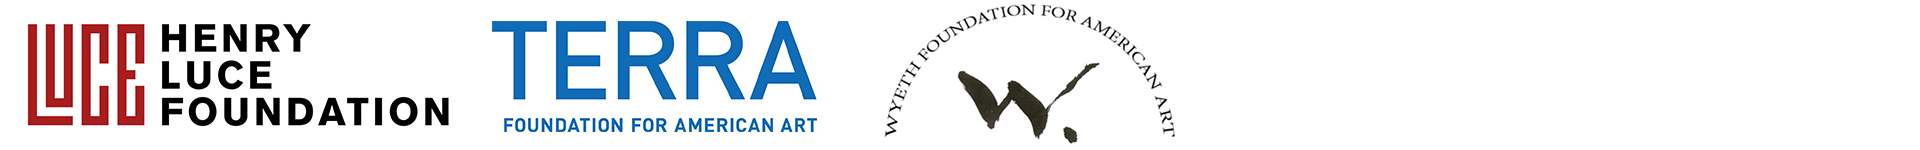 Henry Luce Foundation Logo, Terra Foundation For American Art Blue Logo, and Wyeth Foundation for American Art Logo